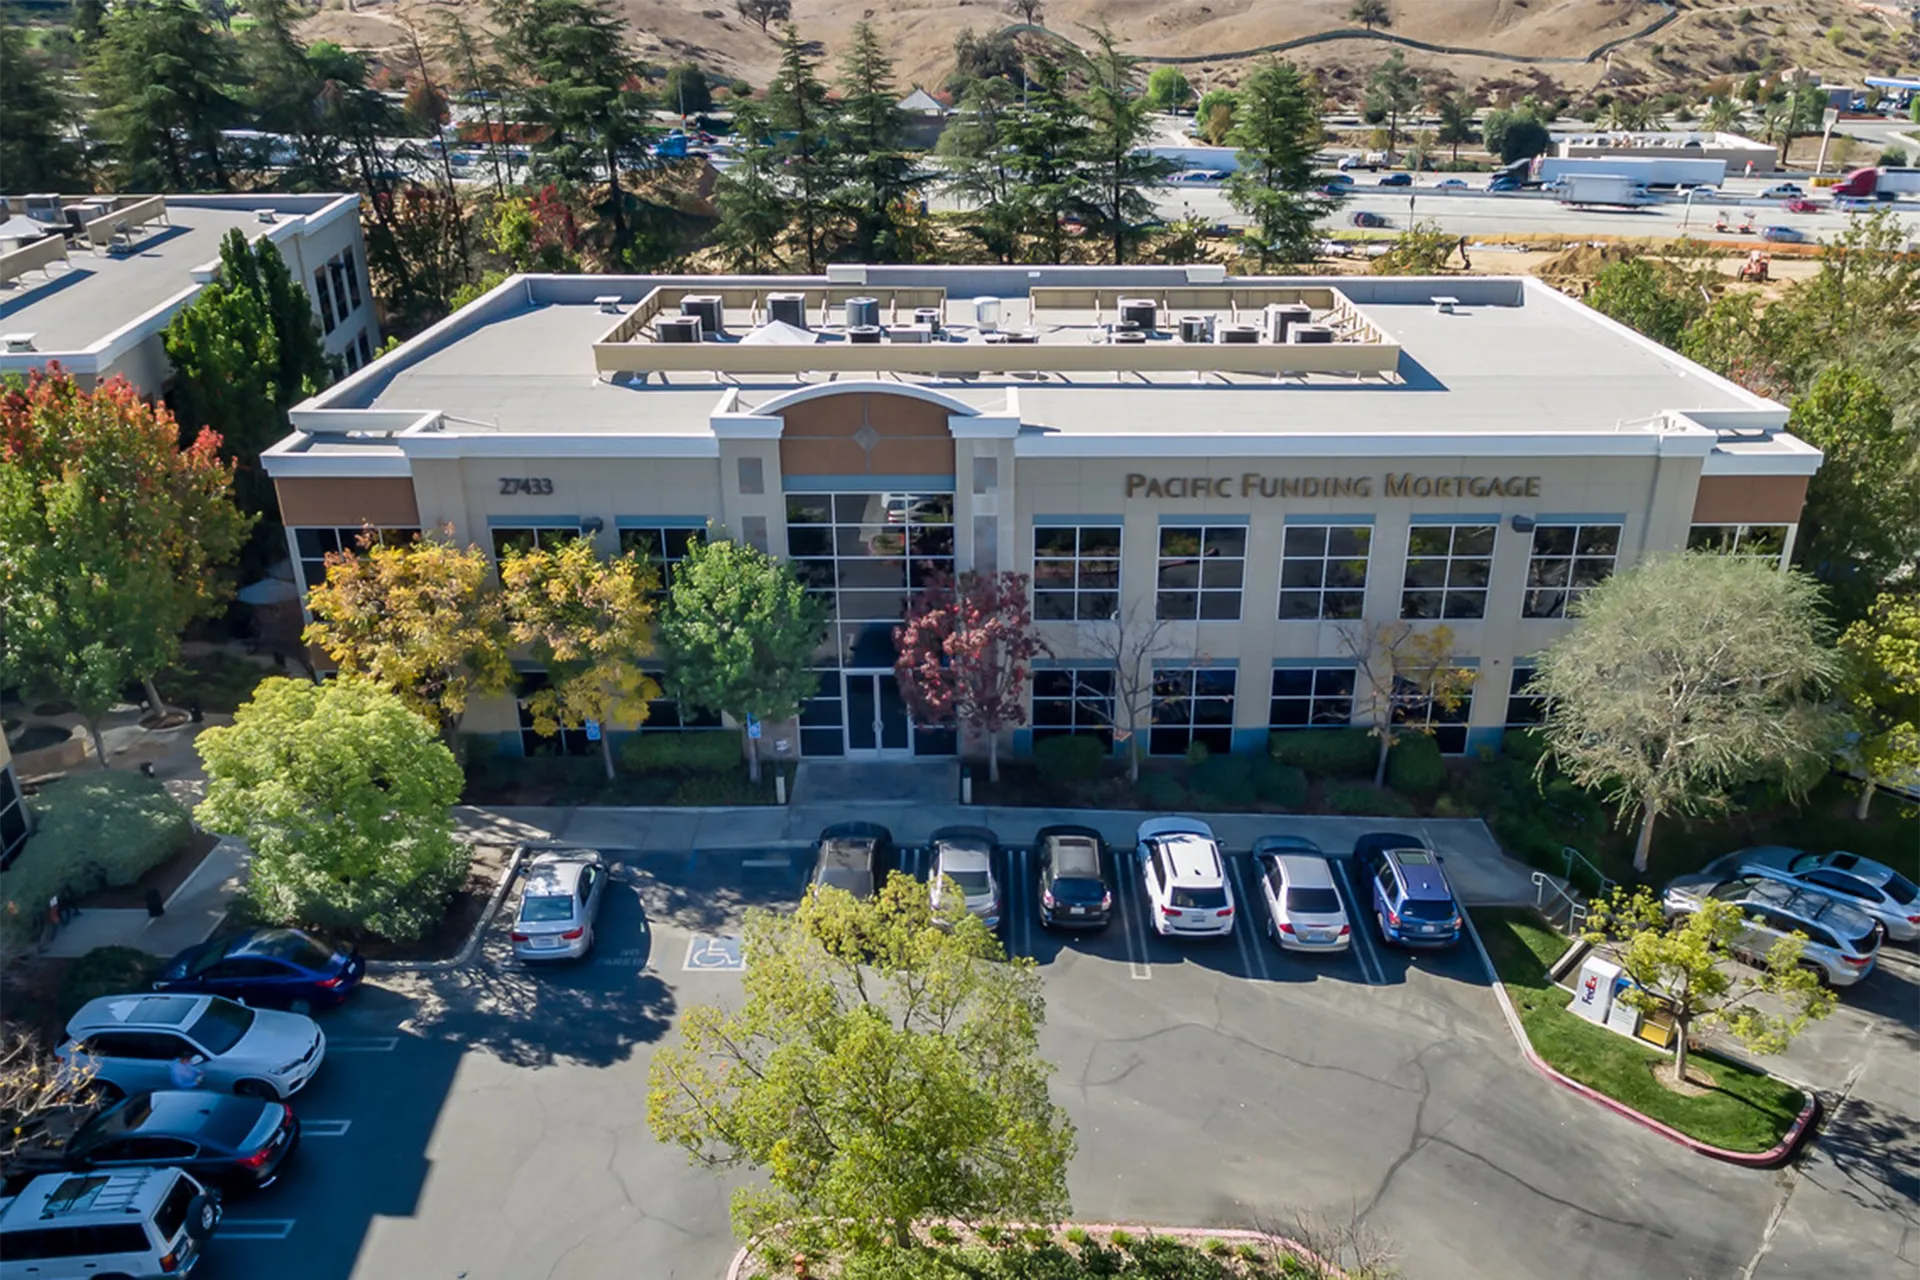 Santa Clarita California Estate Planning and Probate Law Office